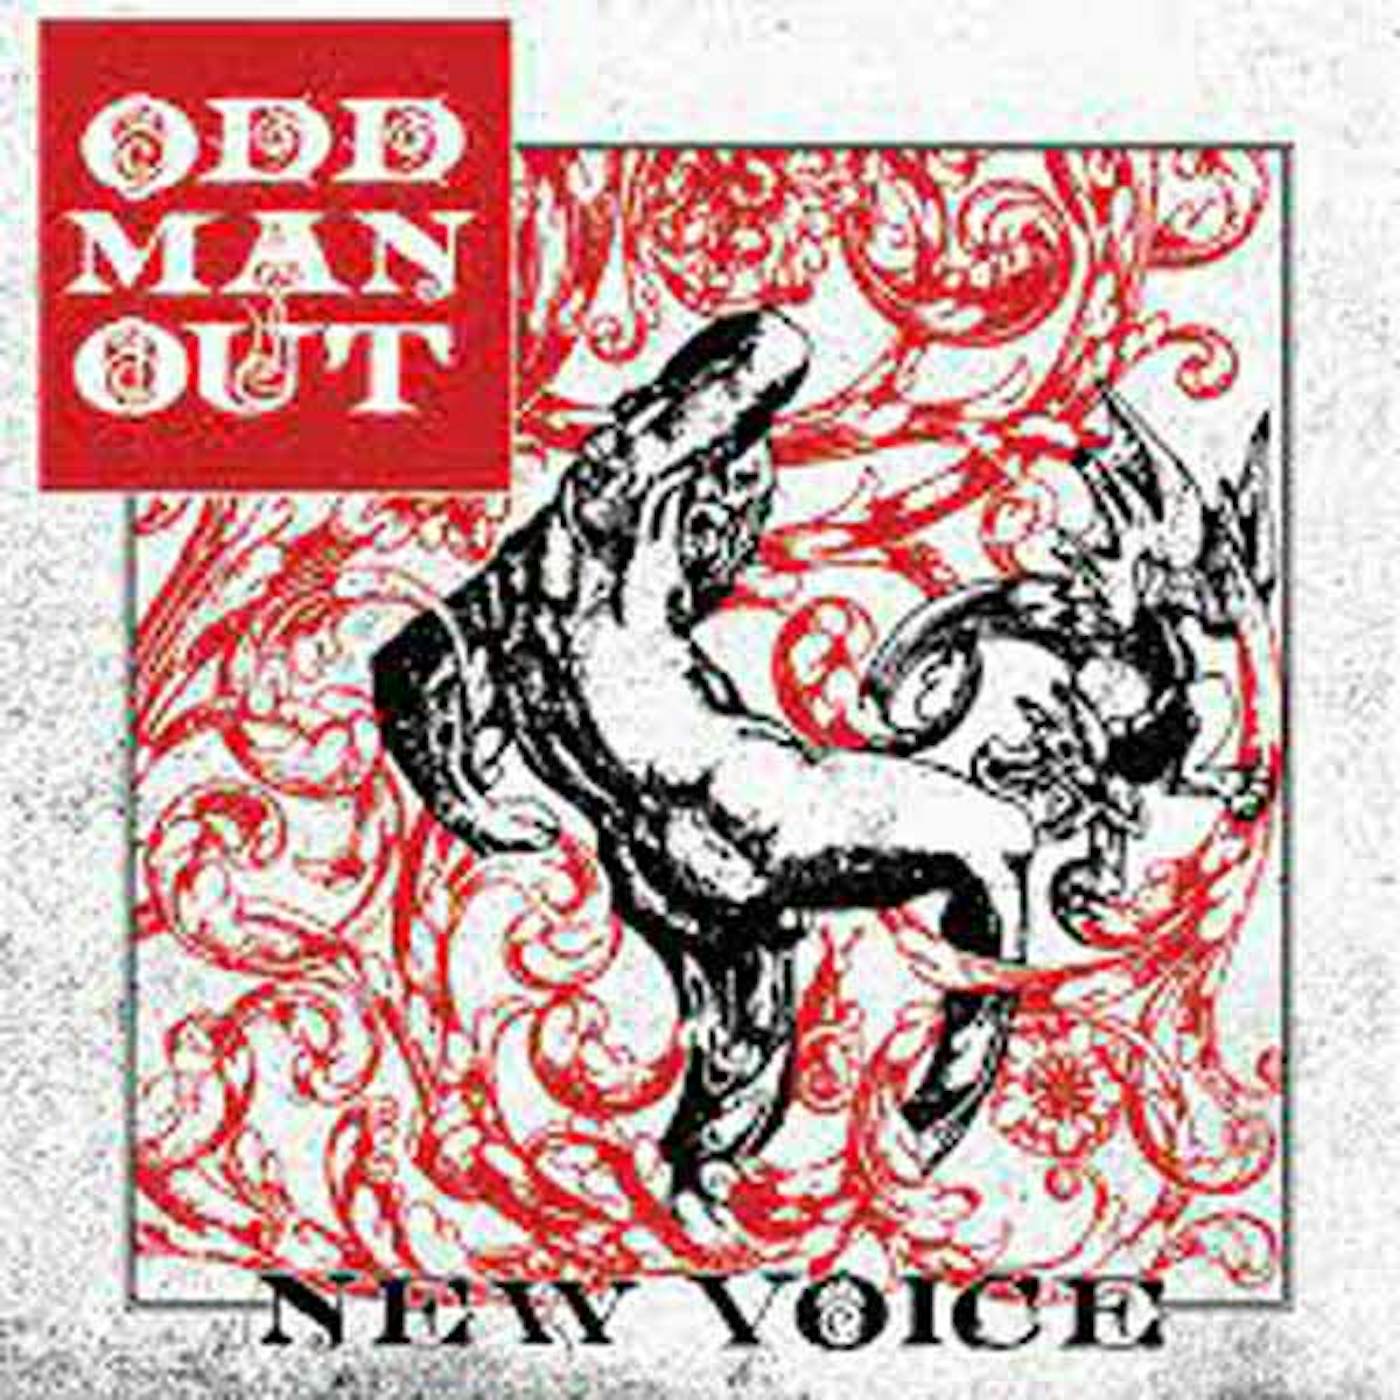  Odd Man Out LP - New Voice (Vinyl)